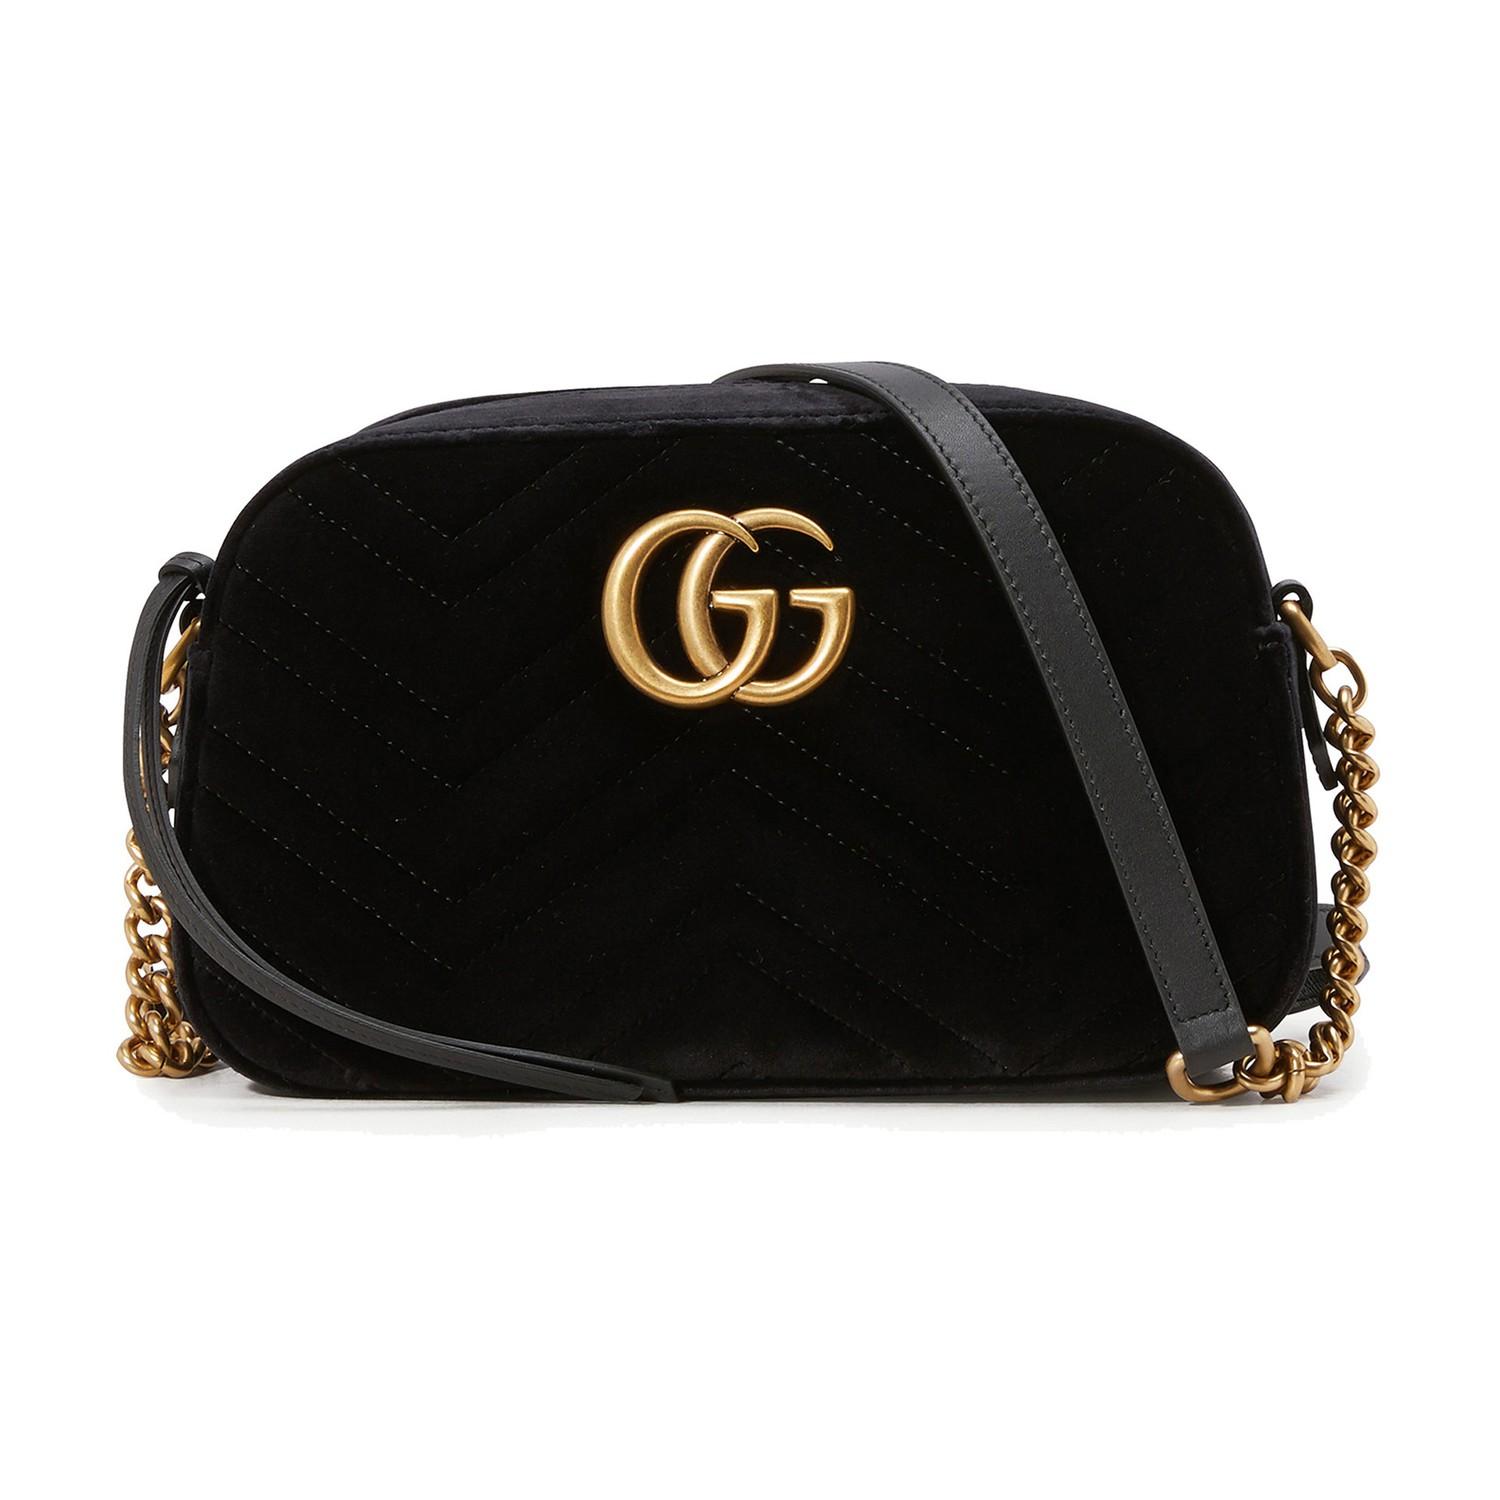 Gucci GG Marmont Velvet Camera Bag in Black - Lyst